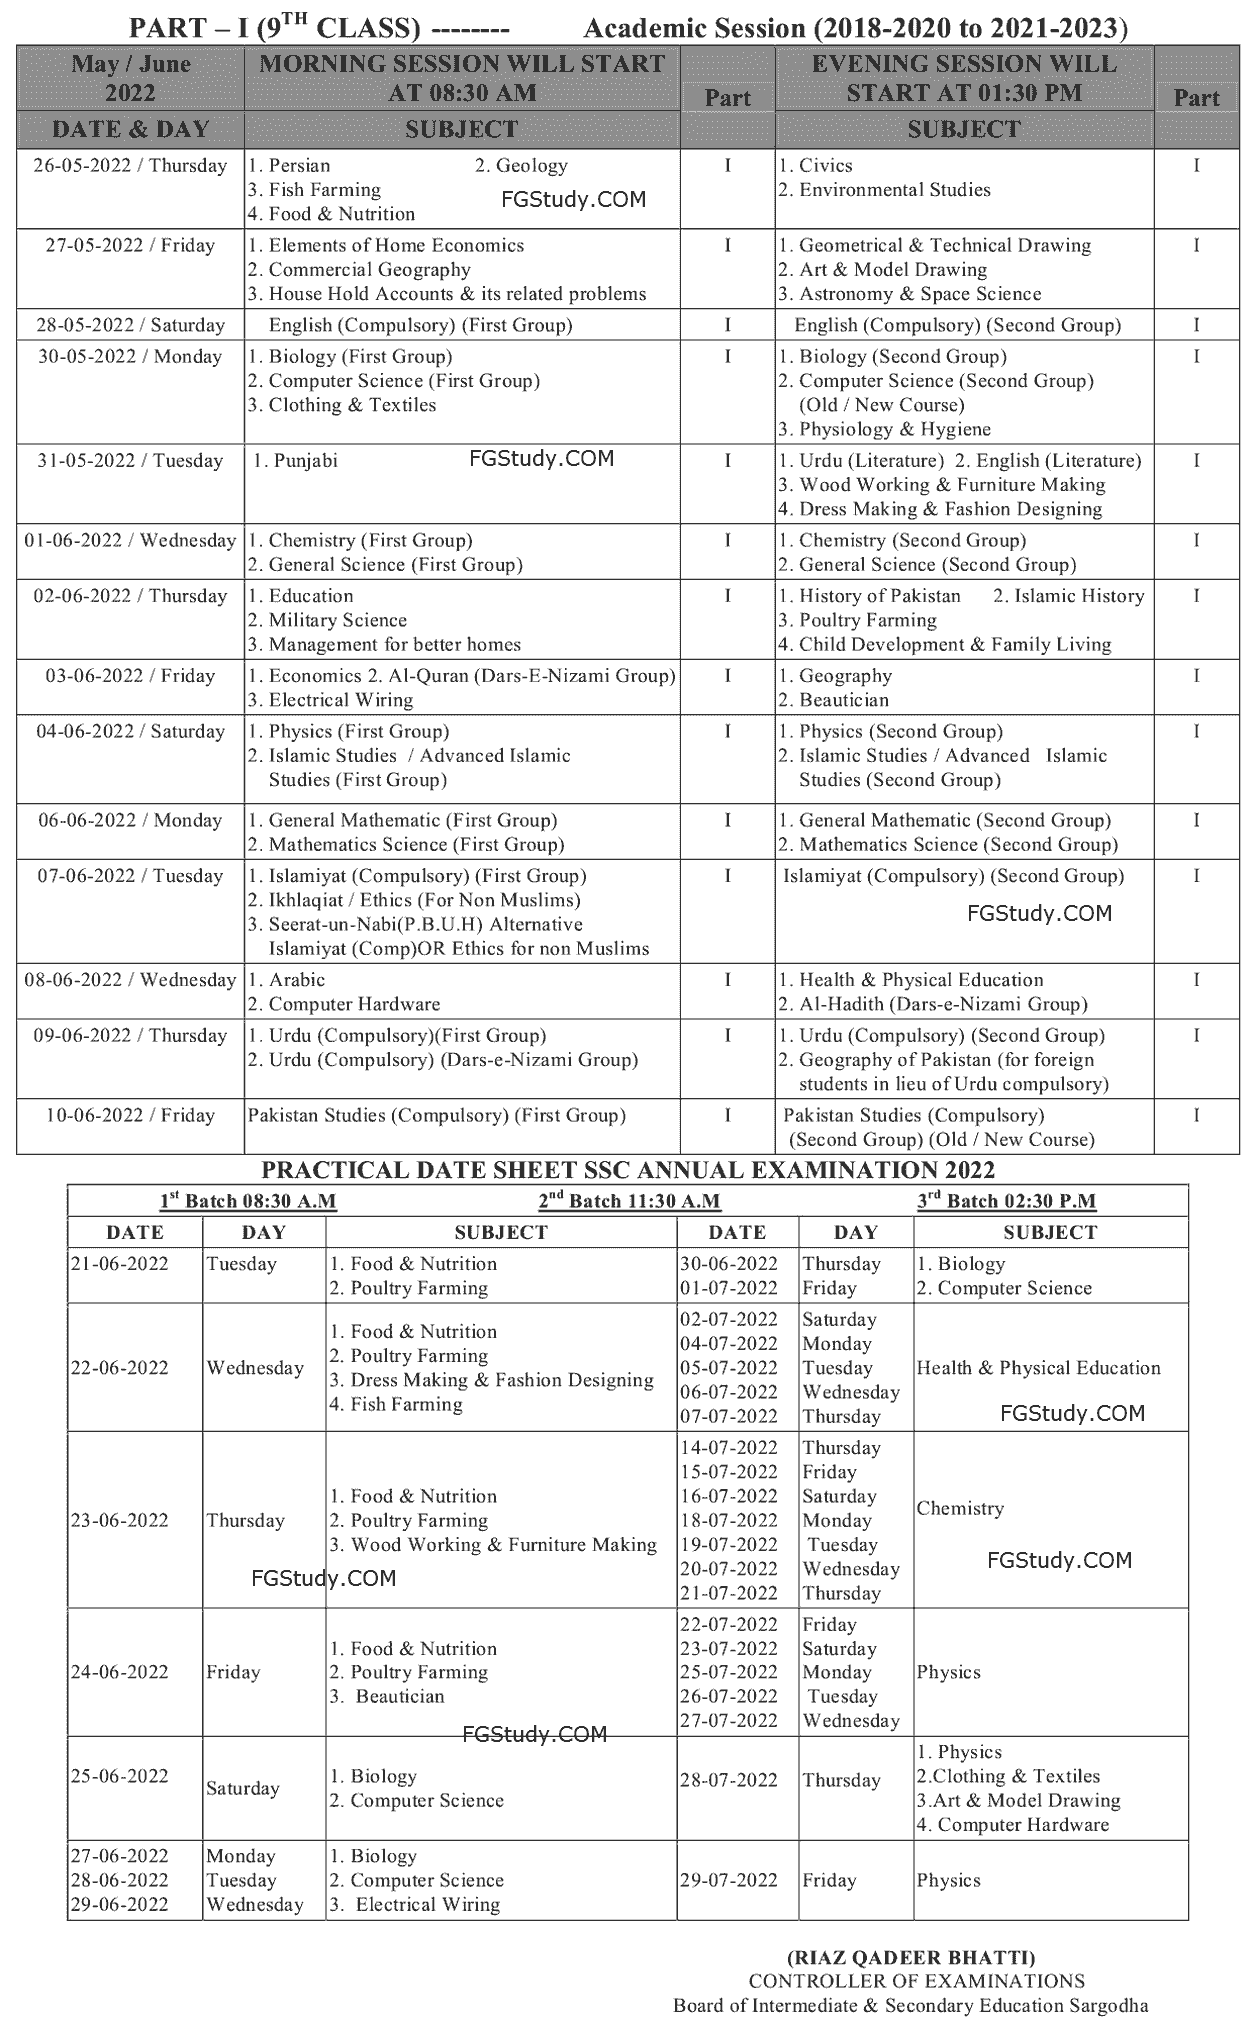 10th Class Date Sheet Bise Sargodha Board 2022 page 2